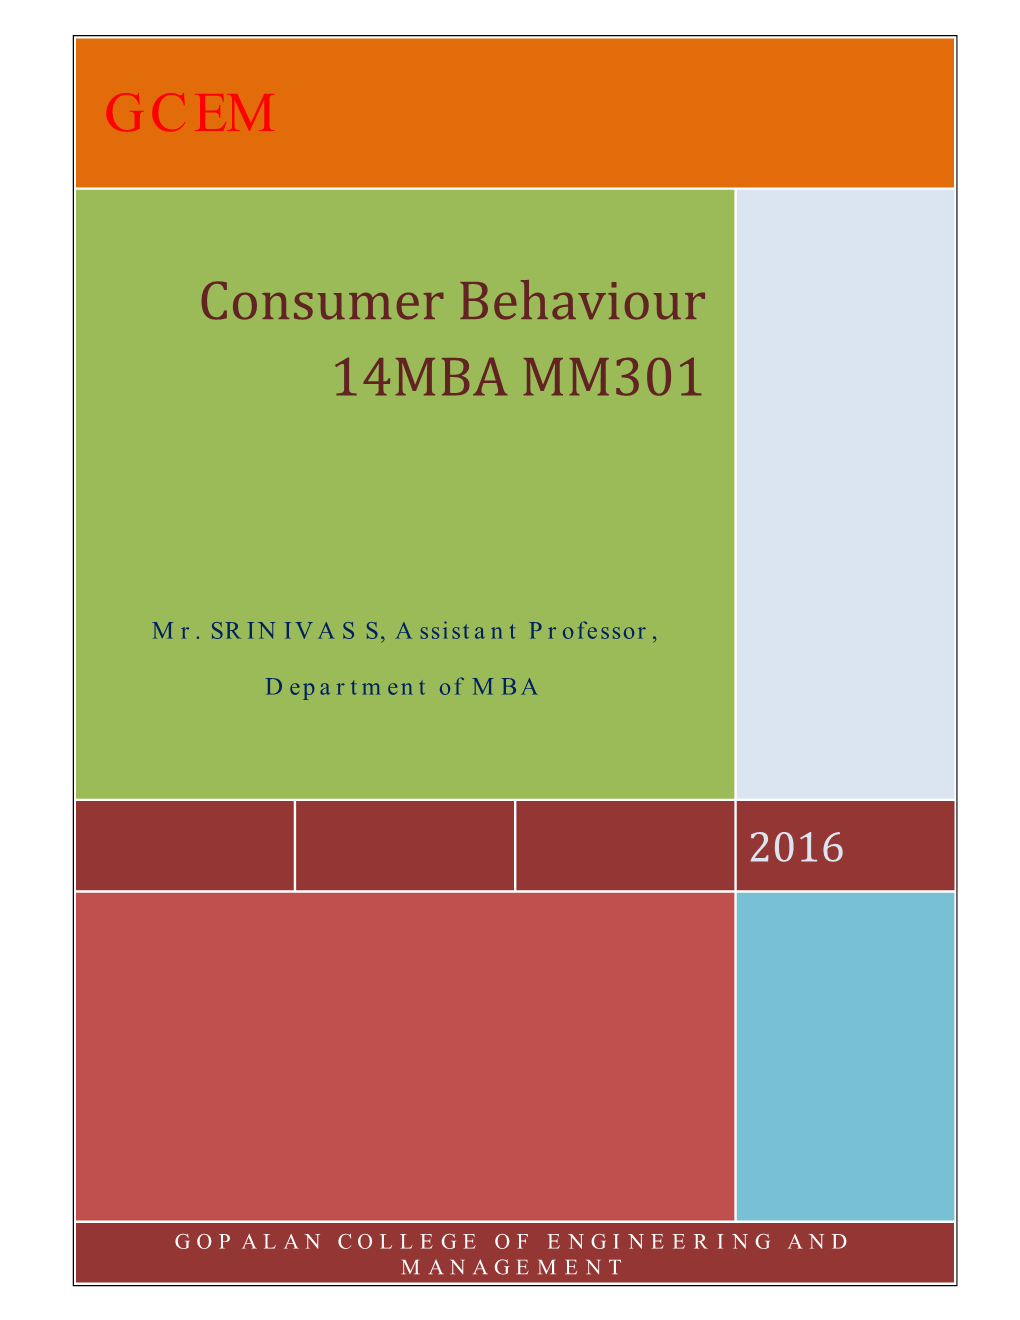 GCEM Consumer Behaviour 14MBA MM301